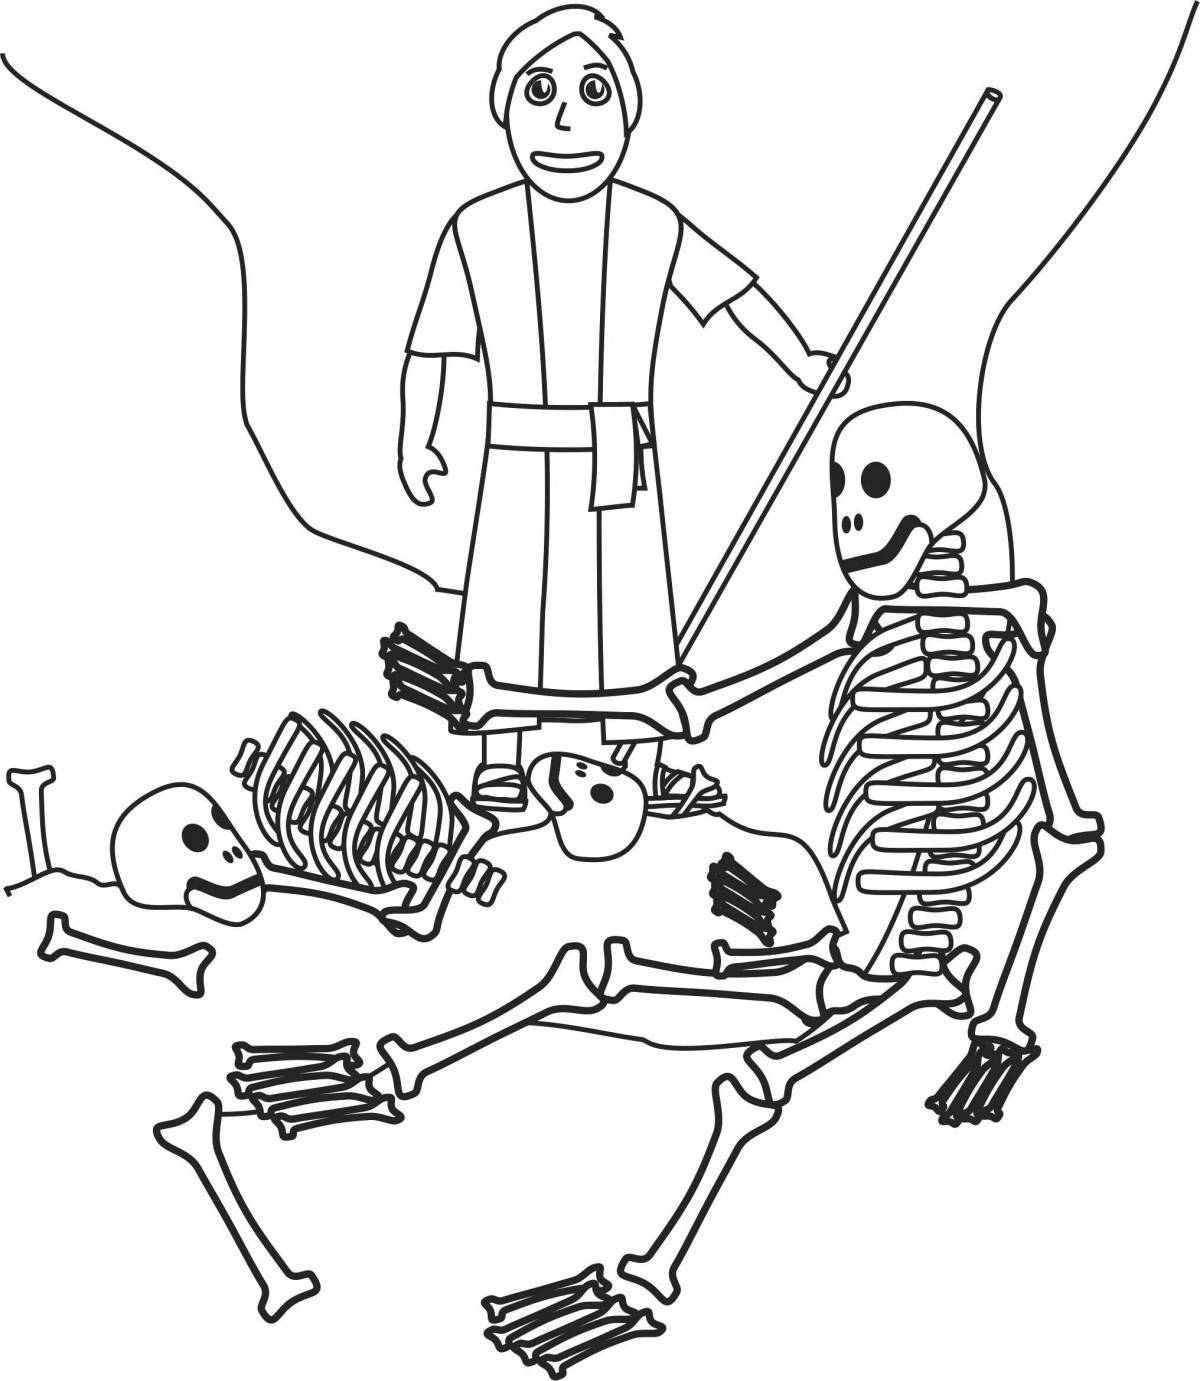 Скелет человека #5